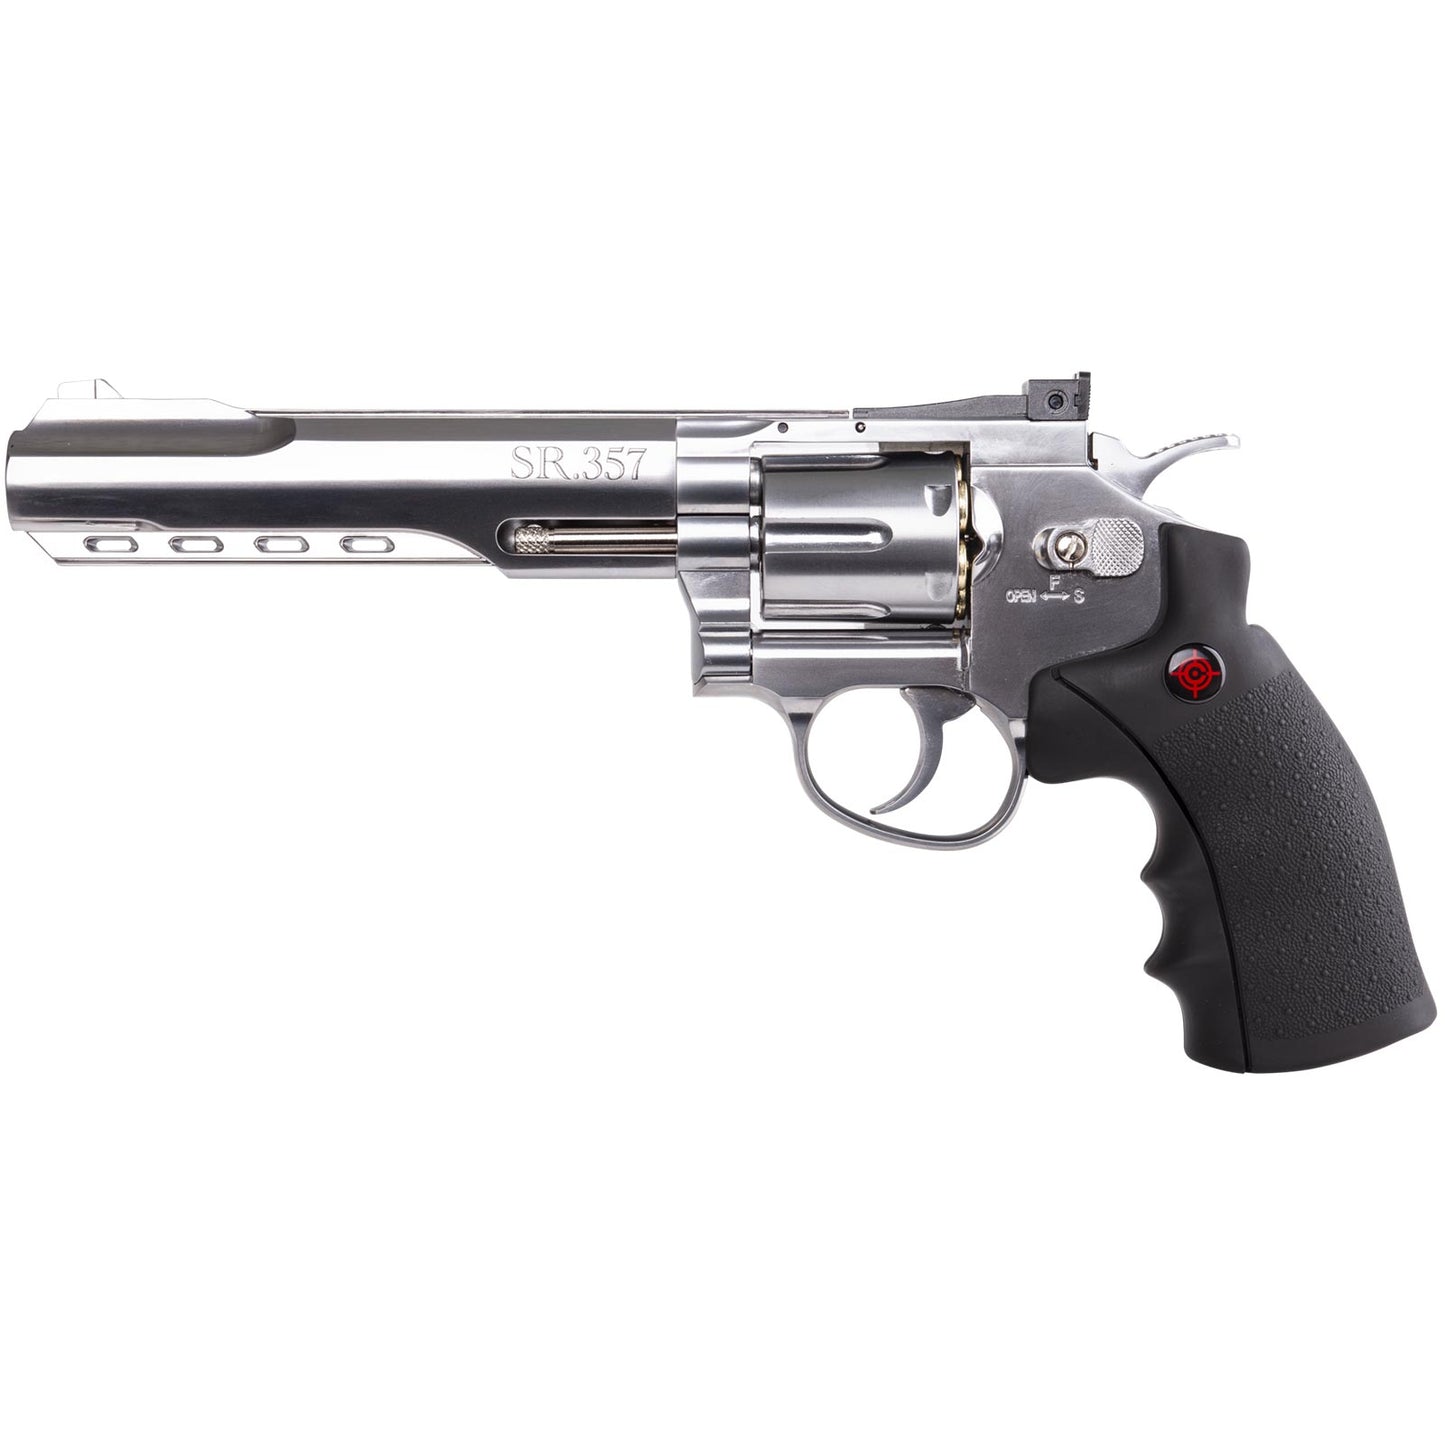 Crosman Sr357 All-metal Co2 Powered Bb Air Revolver